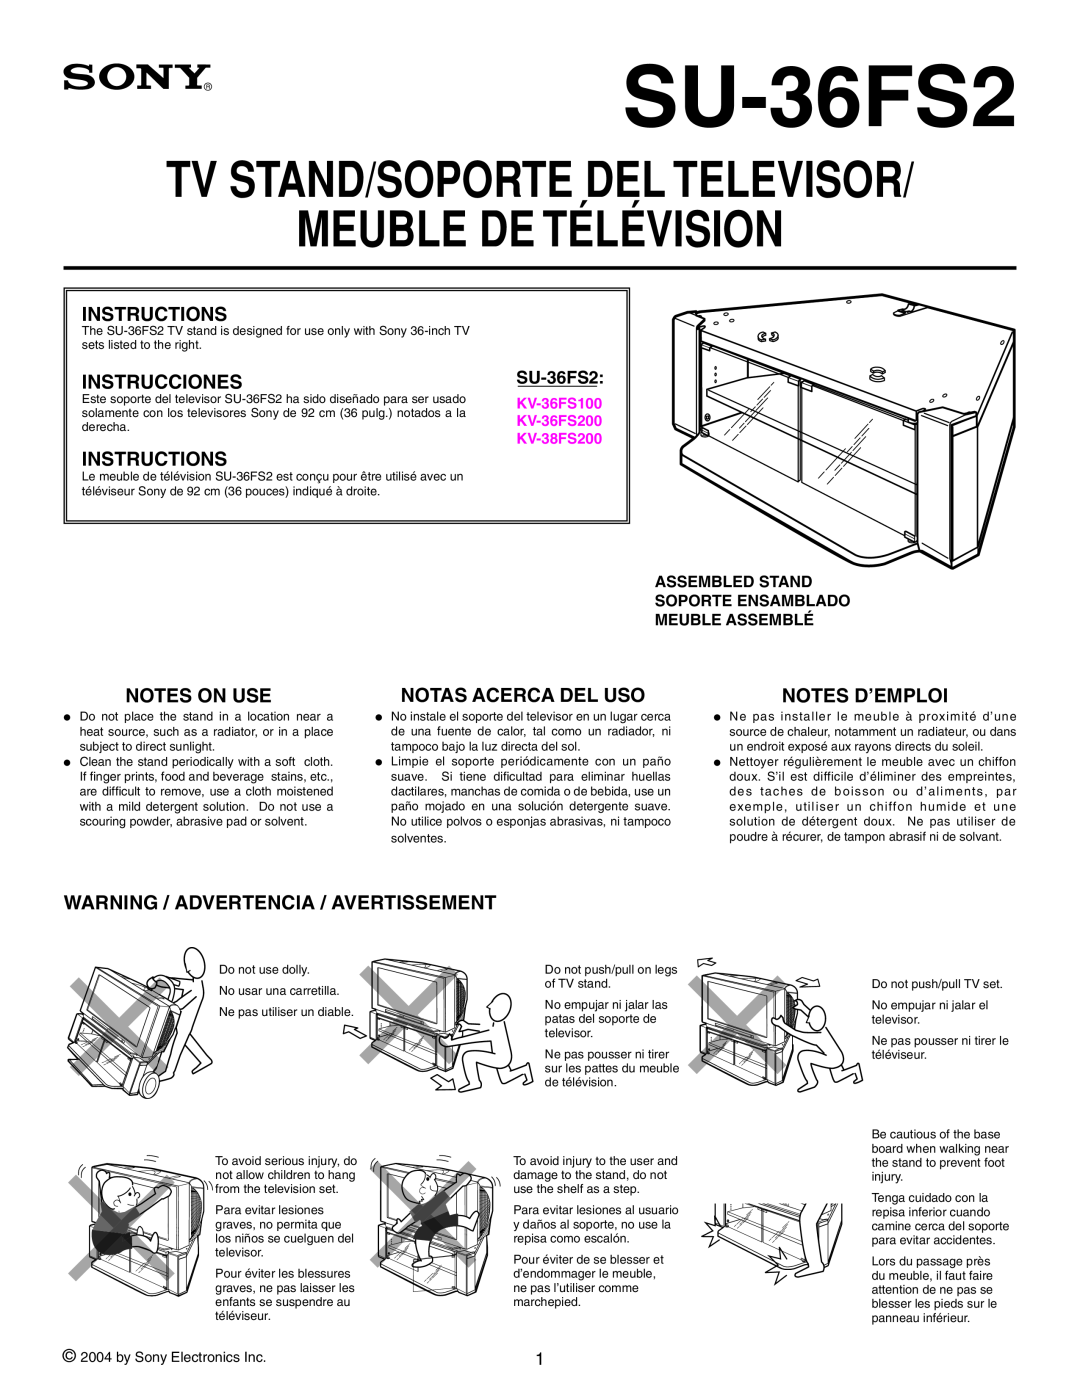 Sony SU-36FS2 manual Meuble De Télévision, Tv Stand/Soporte Del Televisor, Instructions, Instrucciones, Notes On Use 